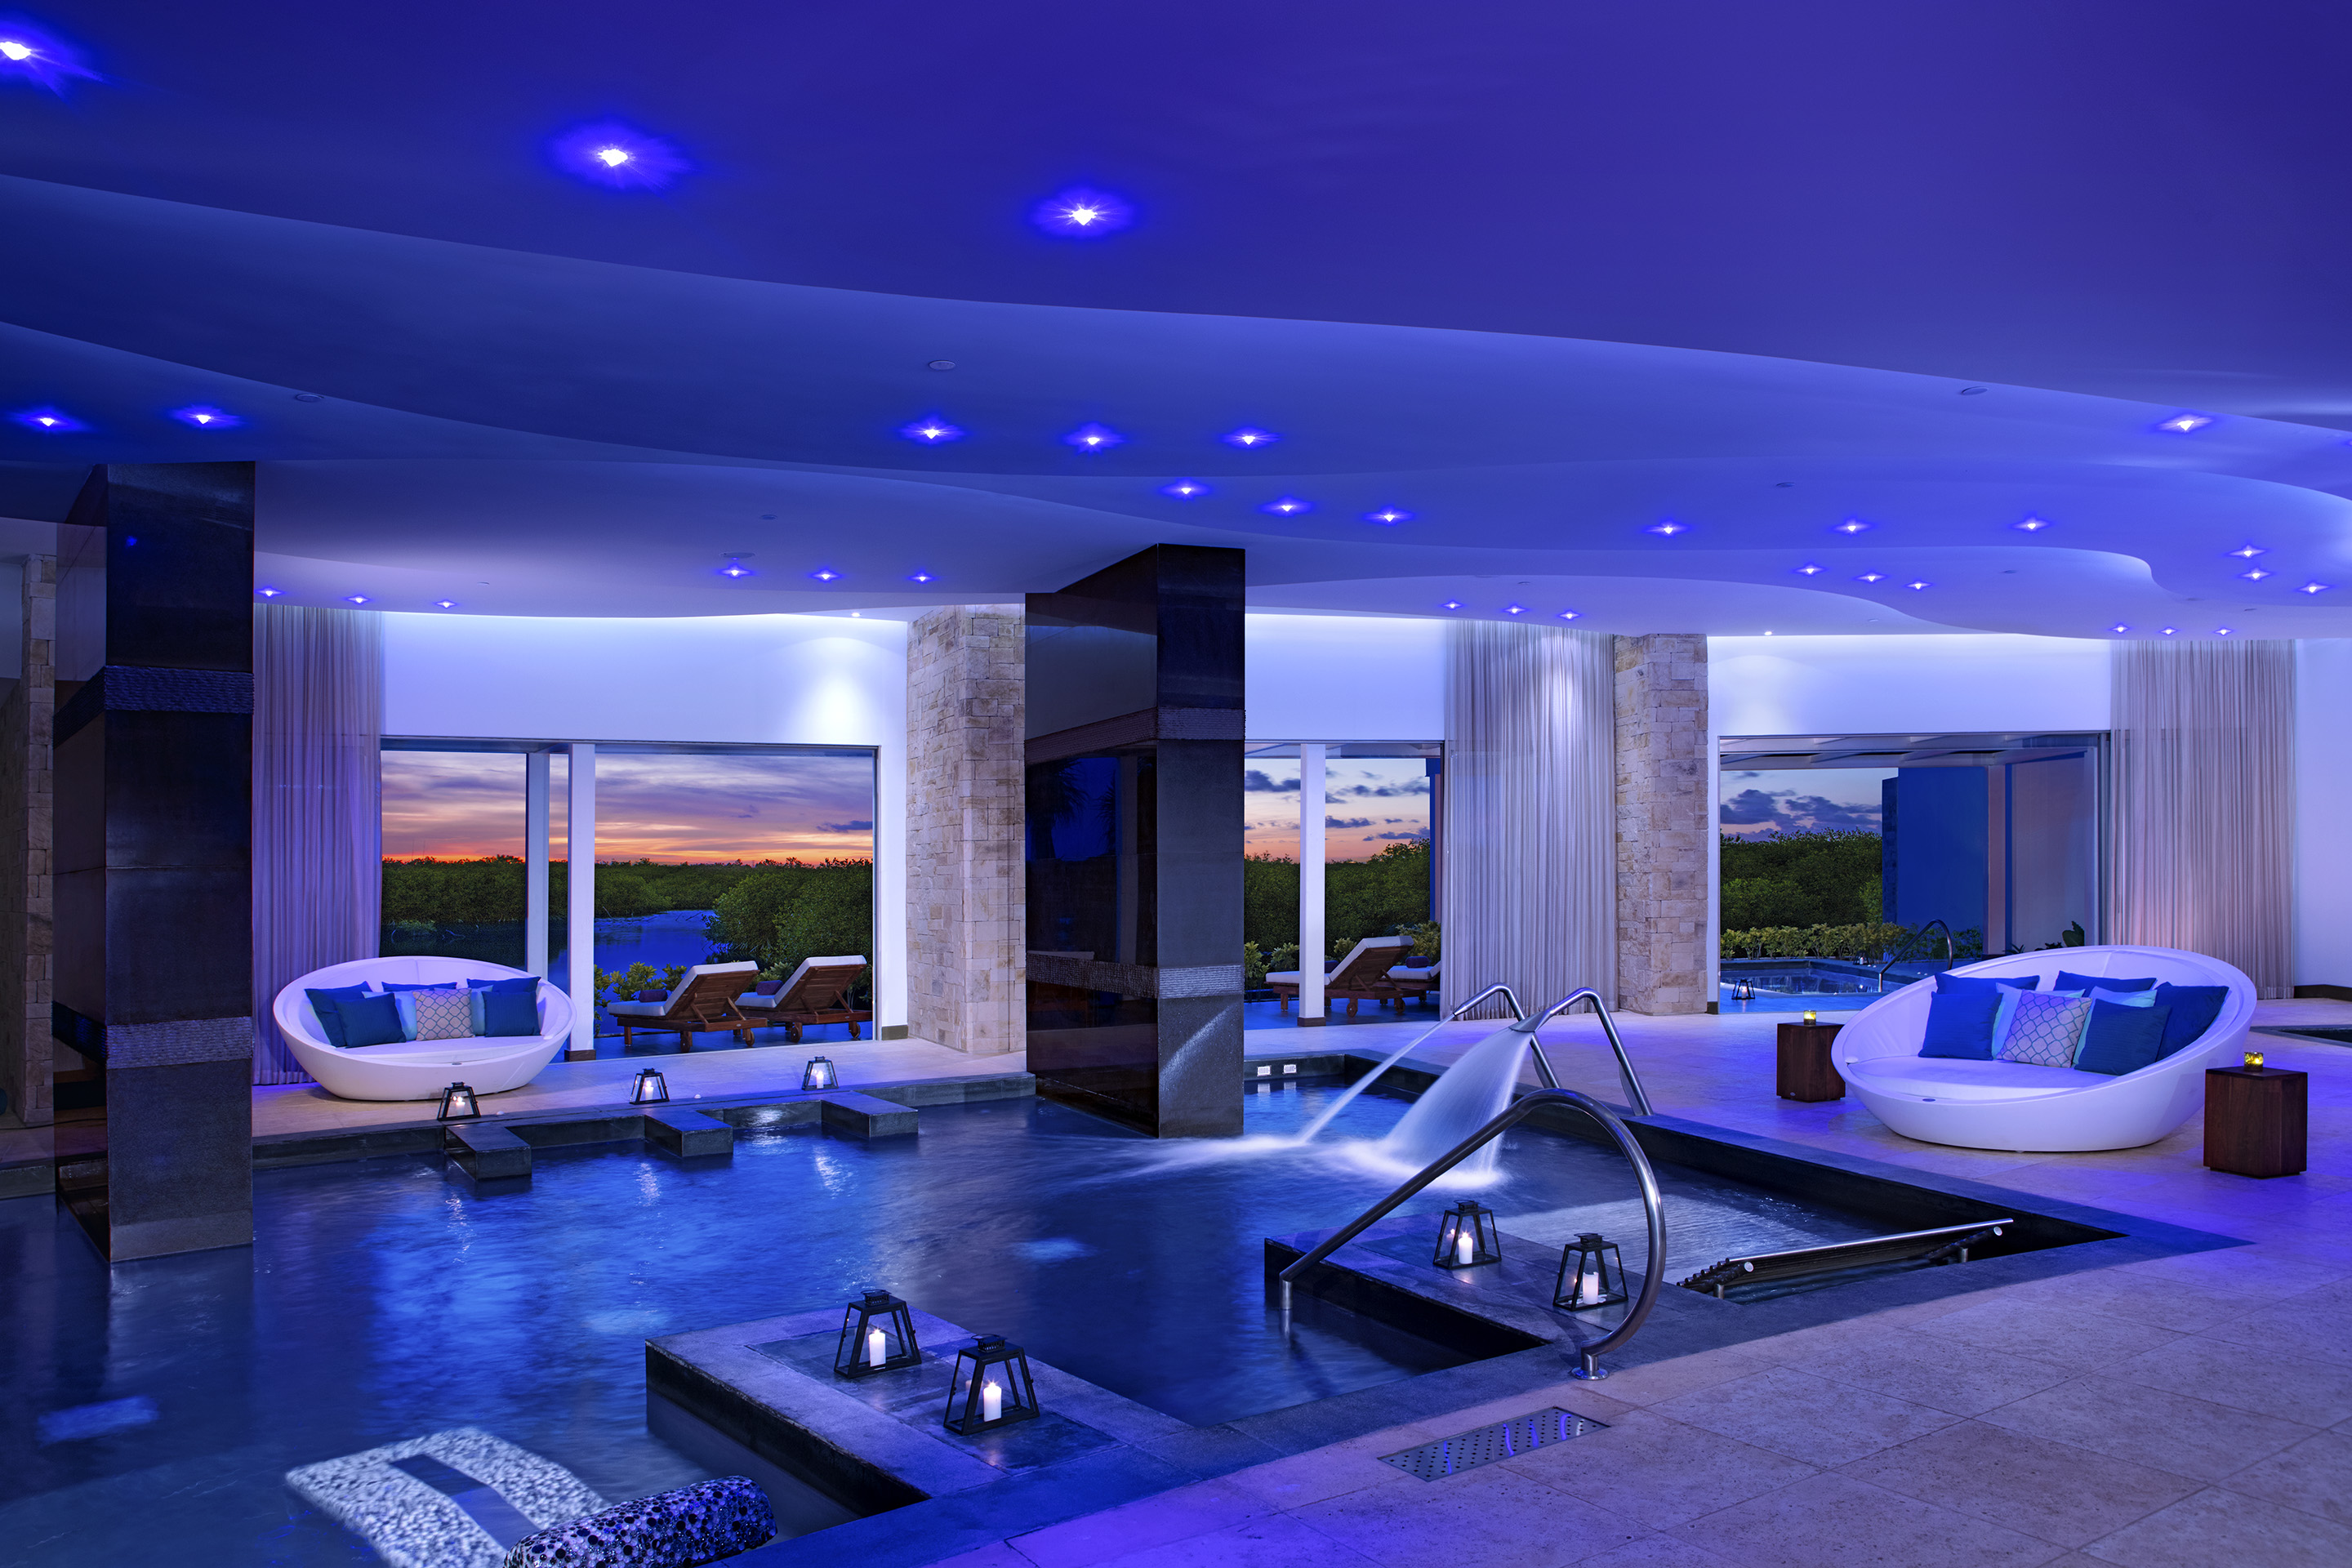 Breathtaking Riviera Cancun Resort & Luxury Spa